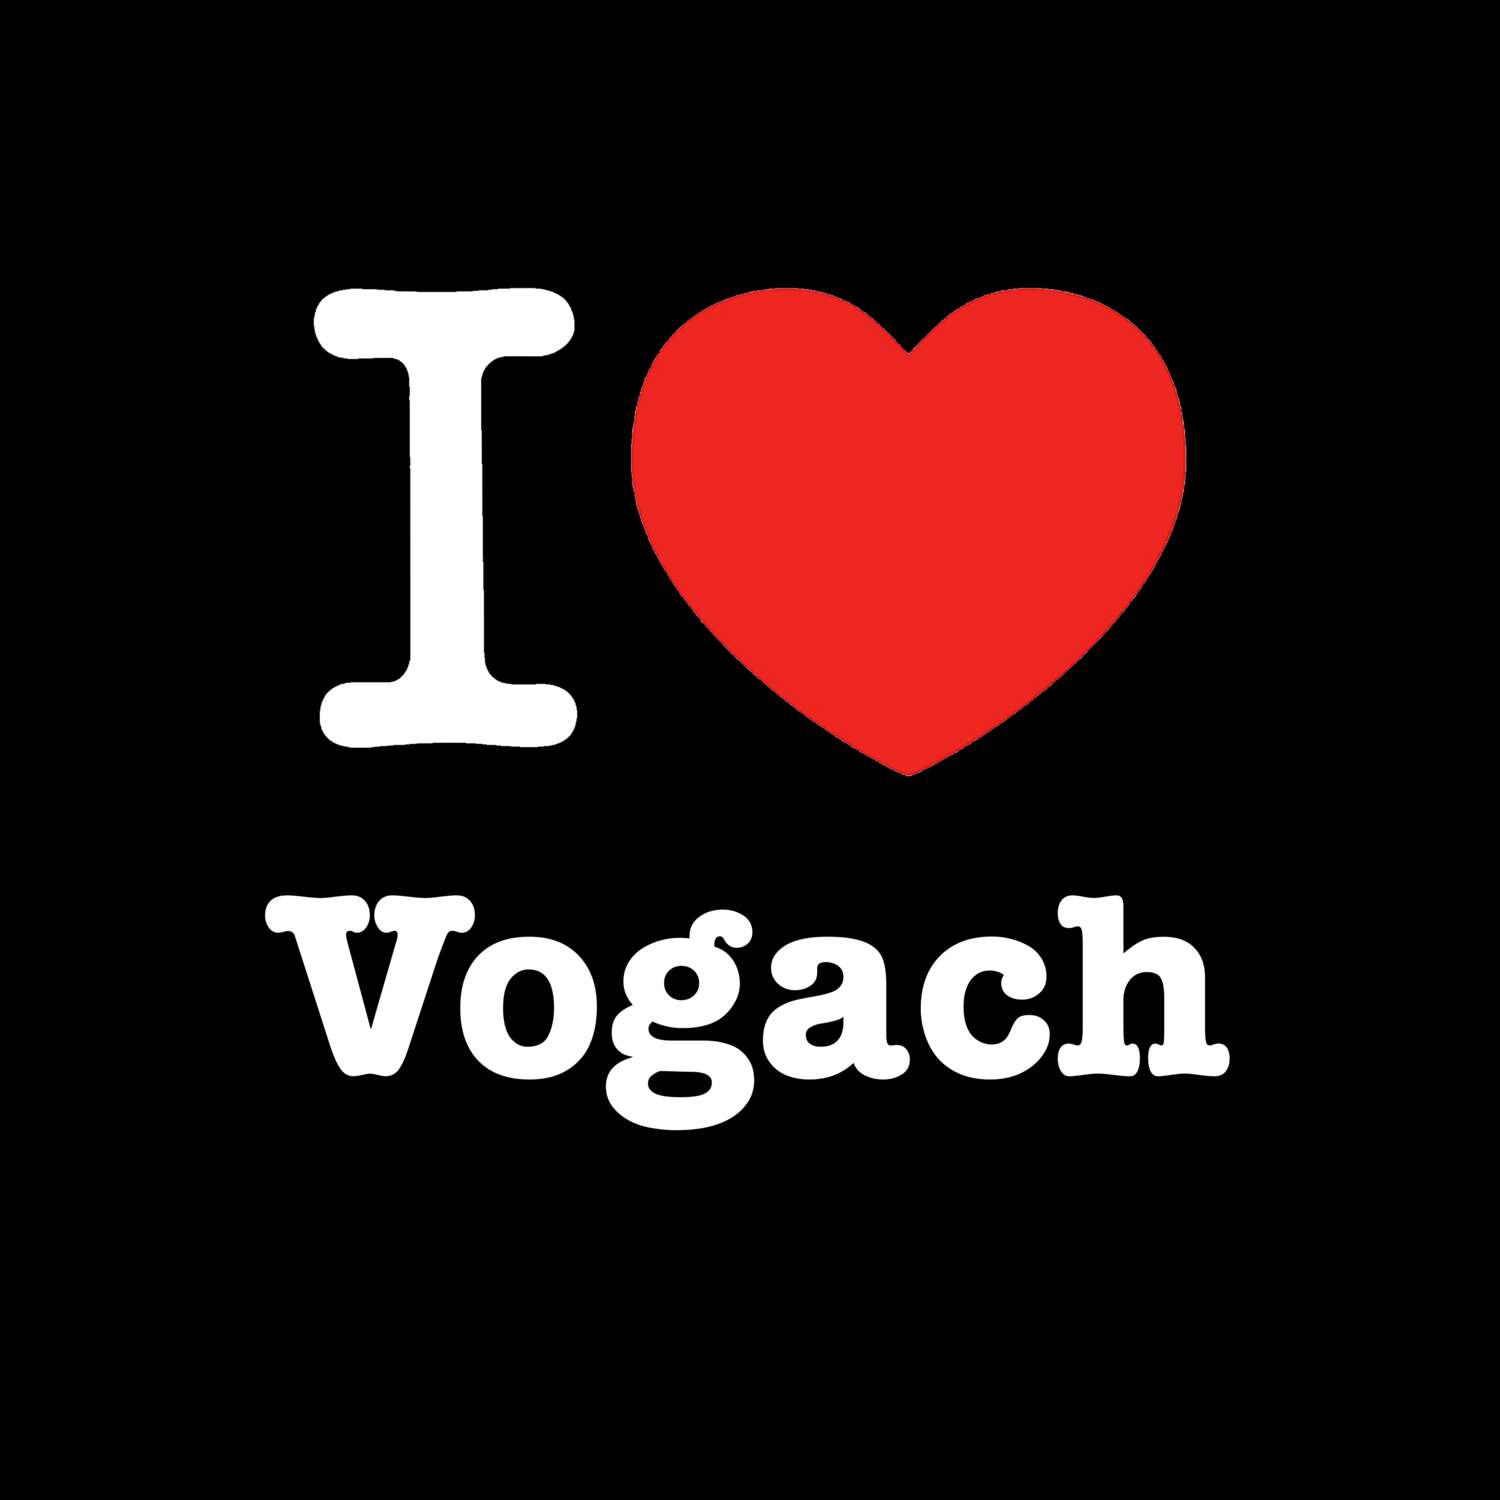 Vogach T-Shirt »I love«